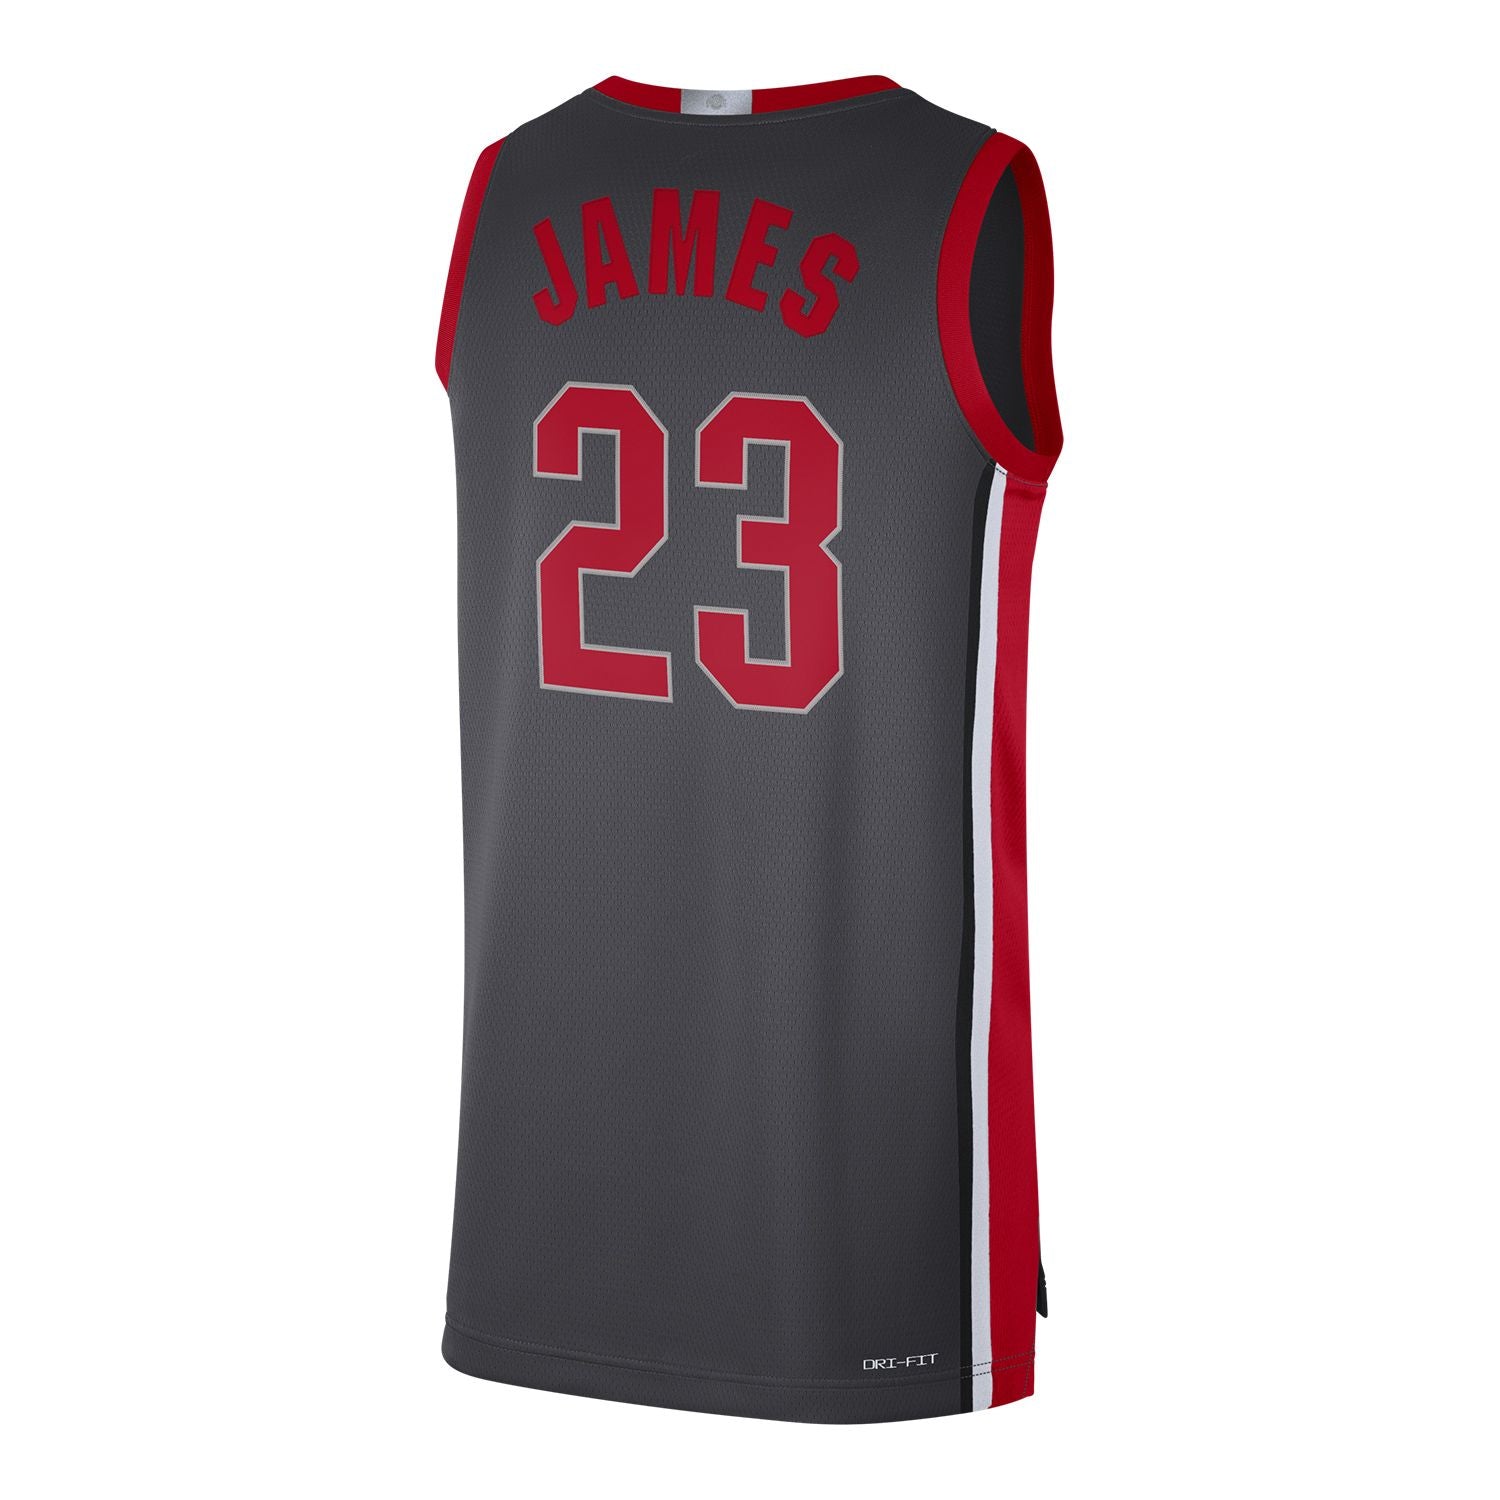 LeBron James Bulls Jerseys Were On Sale At NBA Store